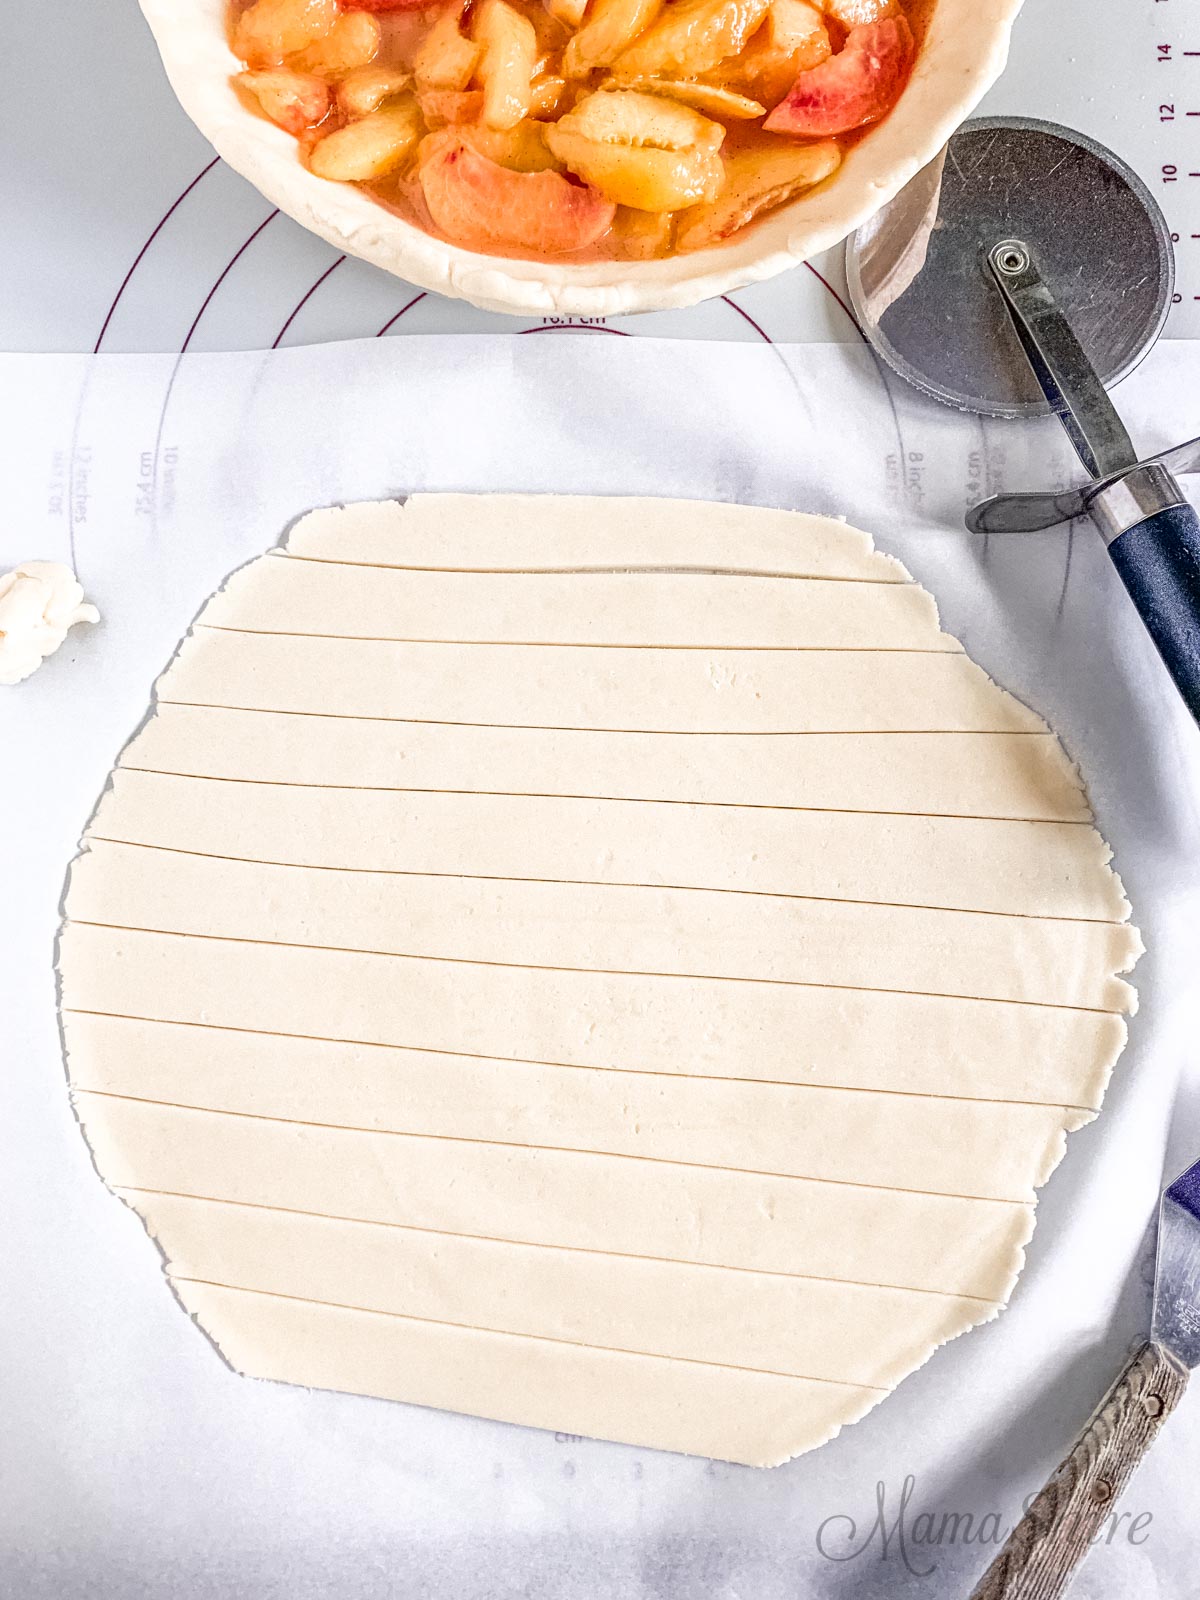 Gluten-free pie crust cut into strips for a lattice top.